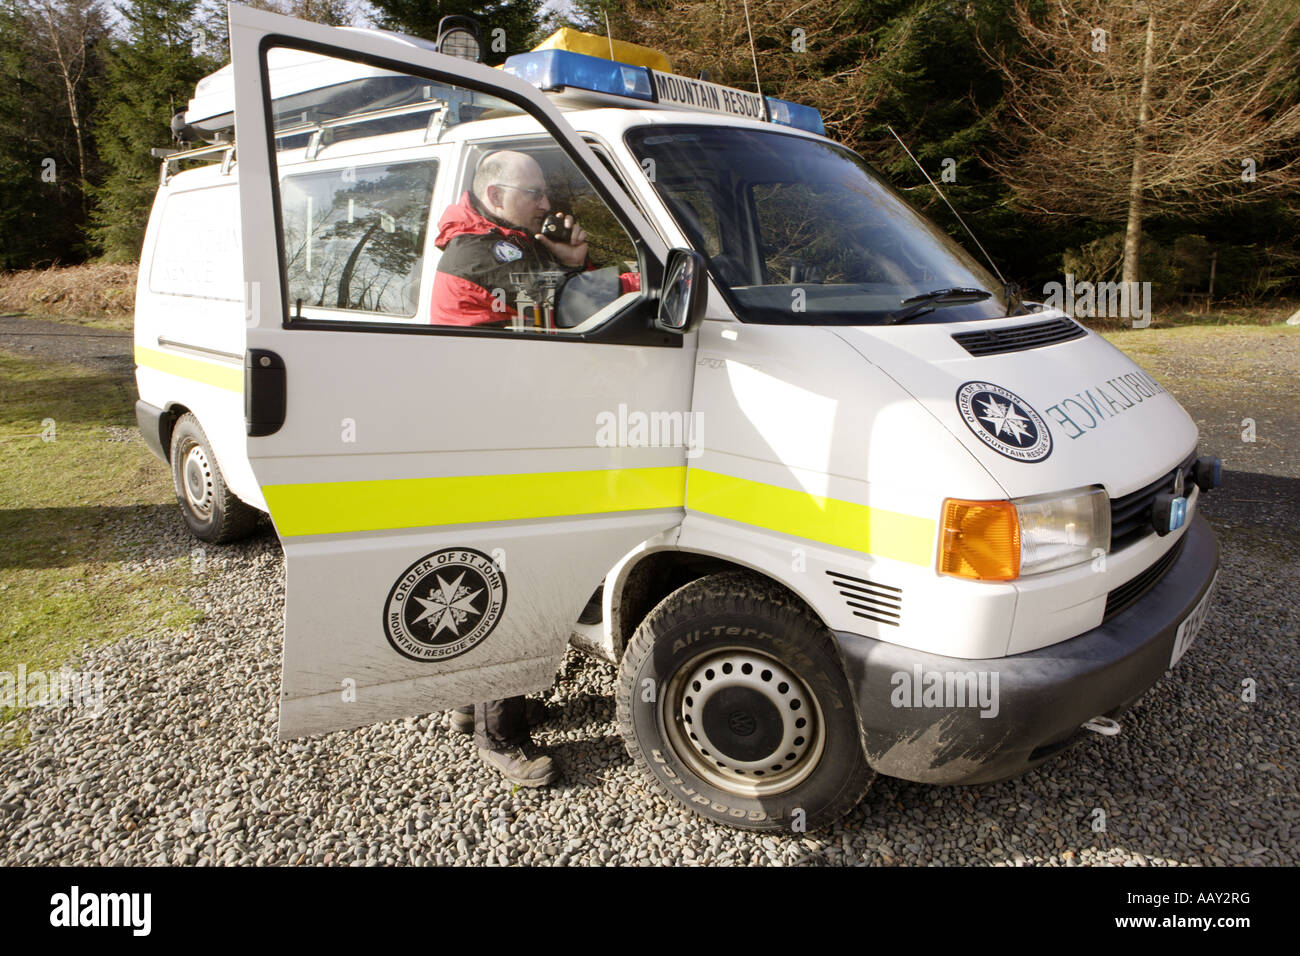 Galloway Mountain Rescue vehicle ambulance Scotland UK Order of St John Mountain Rescue Support Stock Photo